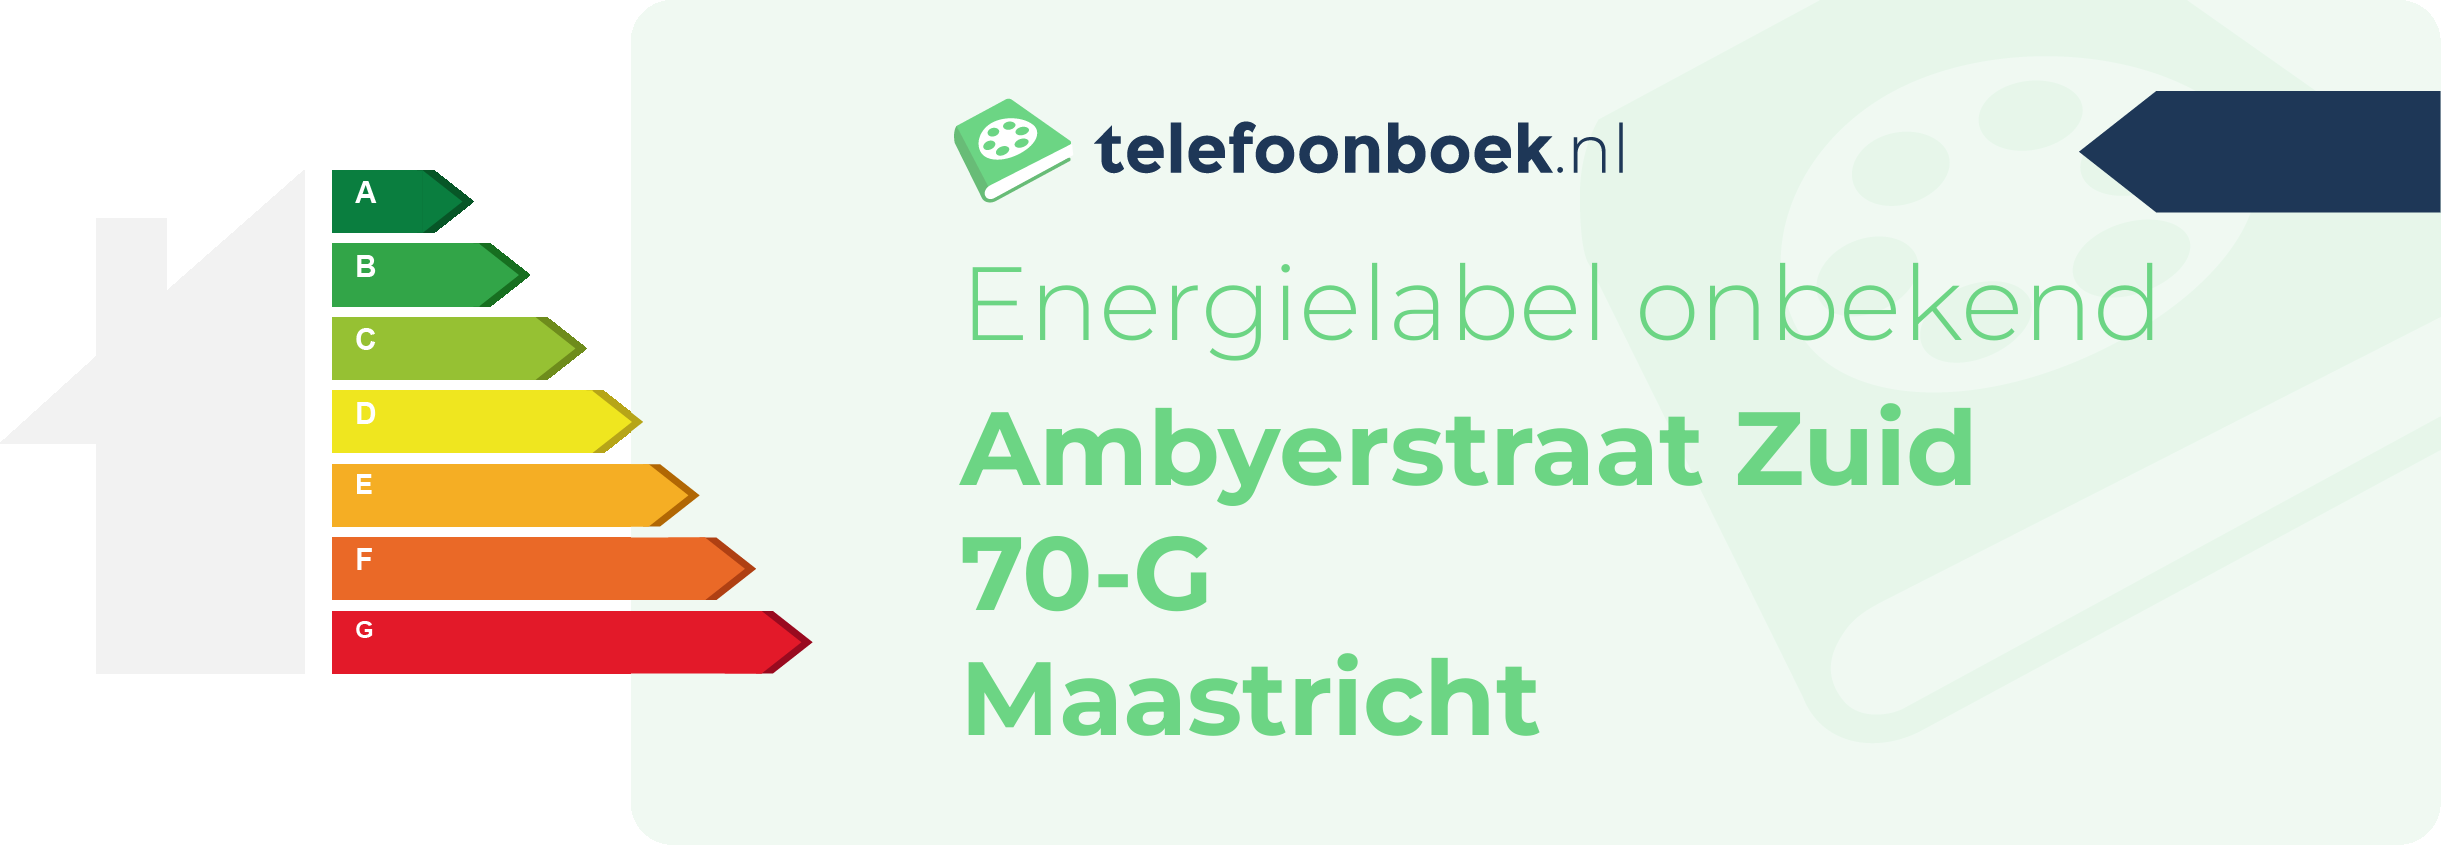 Energielabel Ambyerstraat Zuid 70-G Maastricht